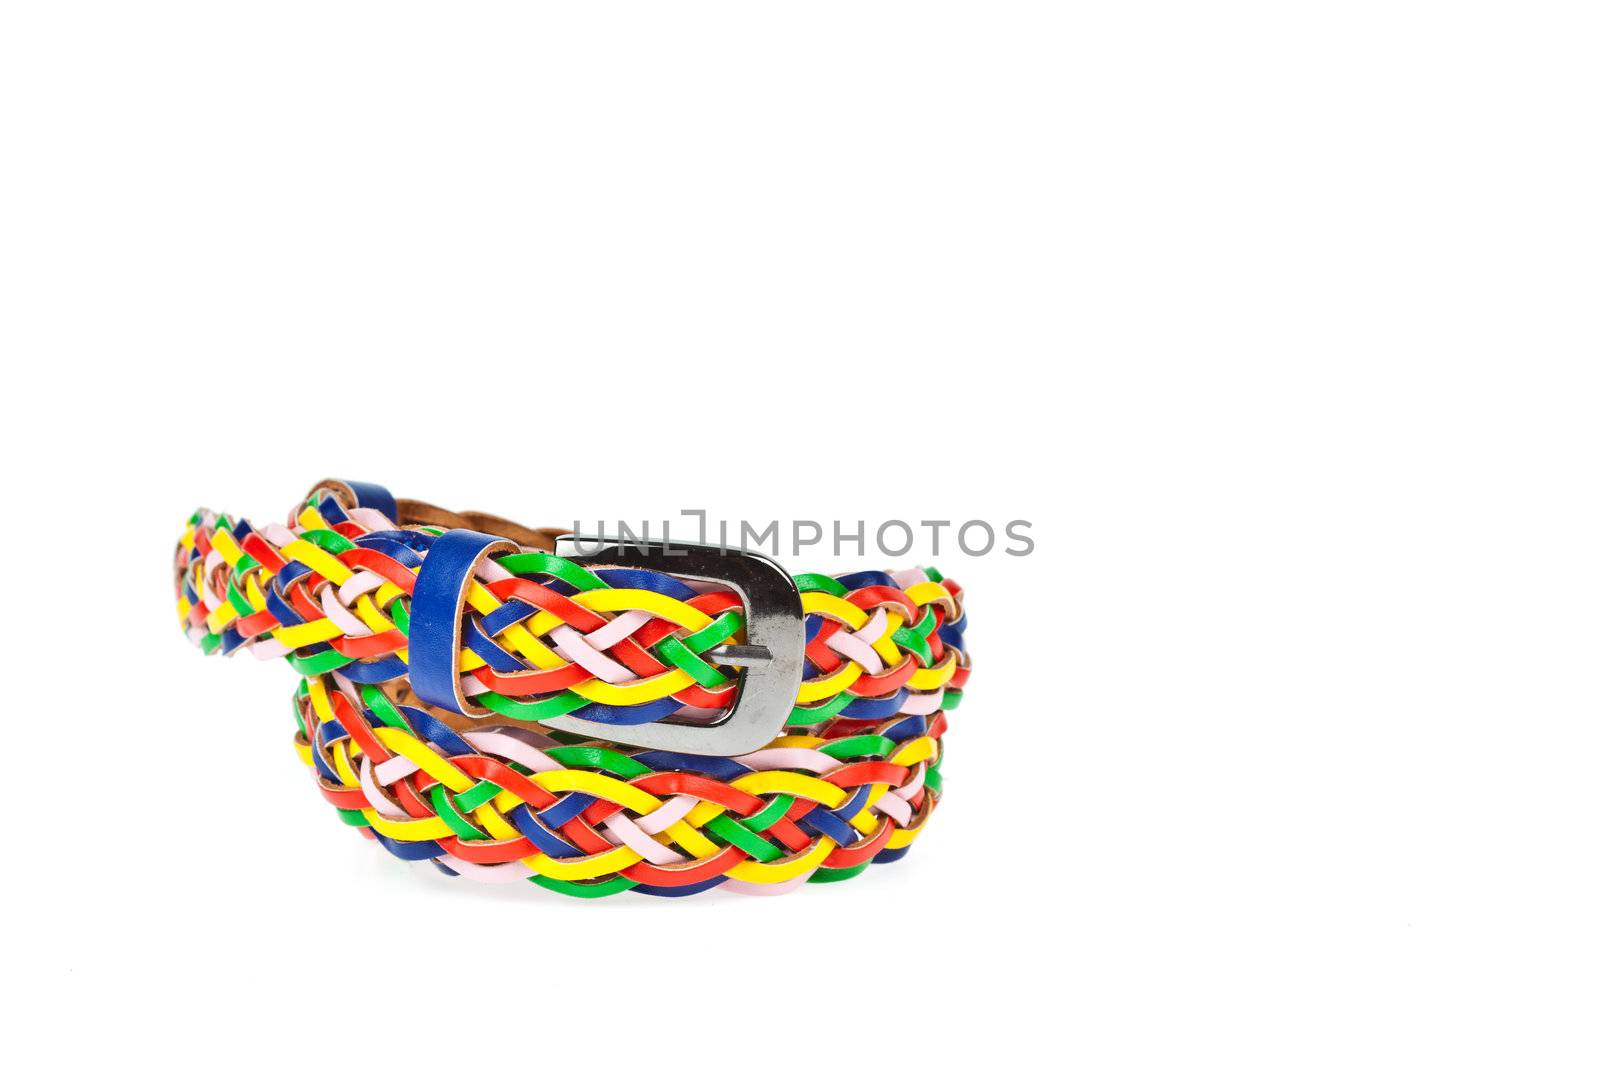 colorful belt  on white background